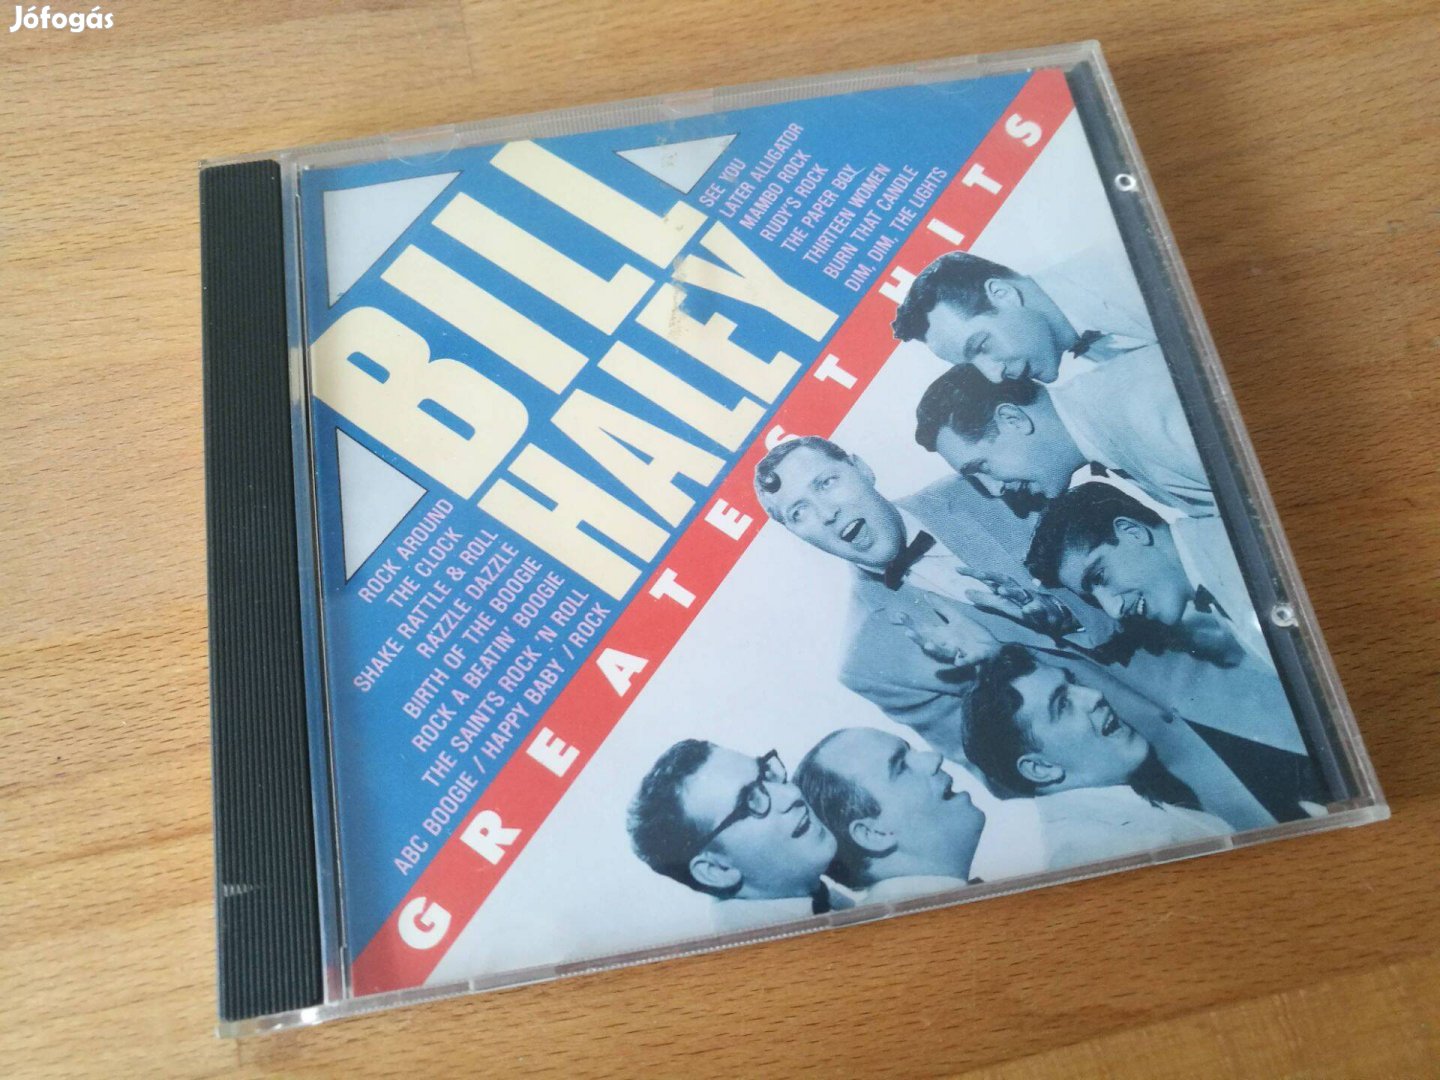 Bill Haley - Greatest hits (Citadel, Israel, CD)